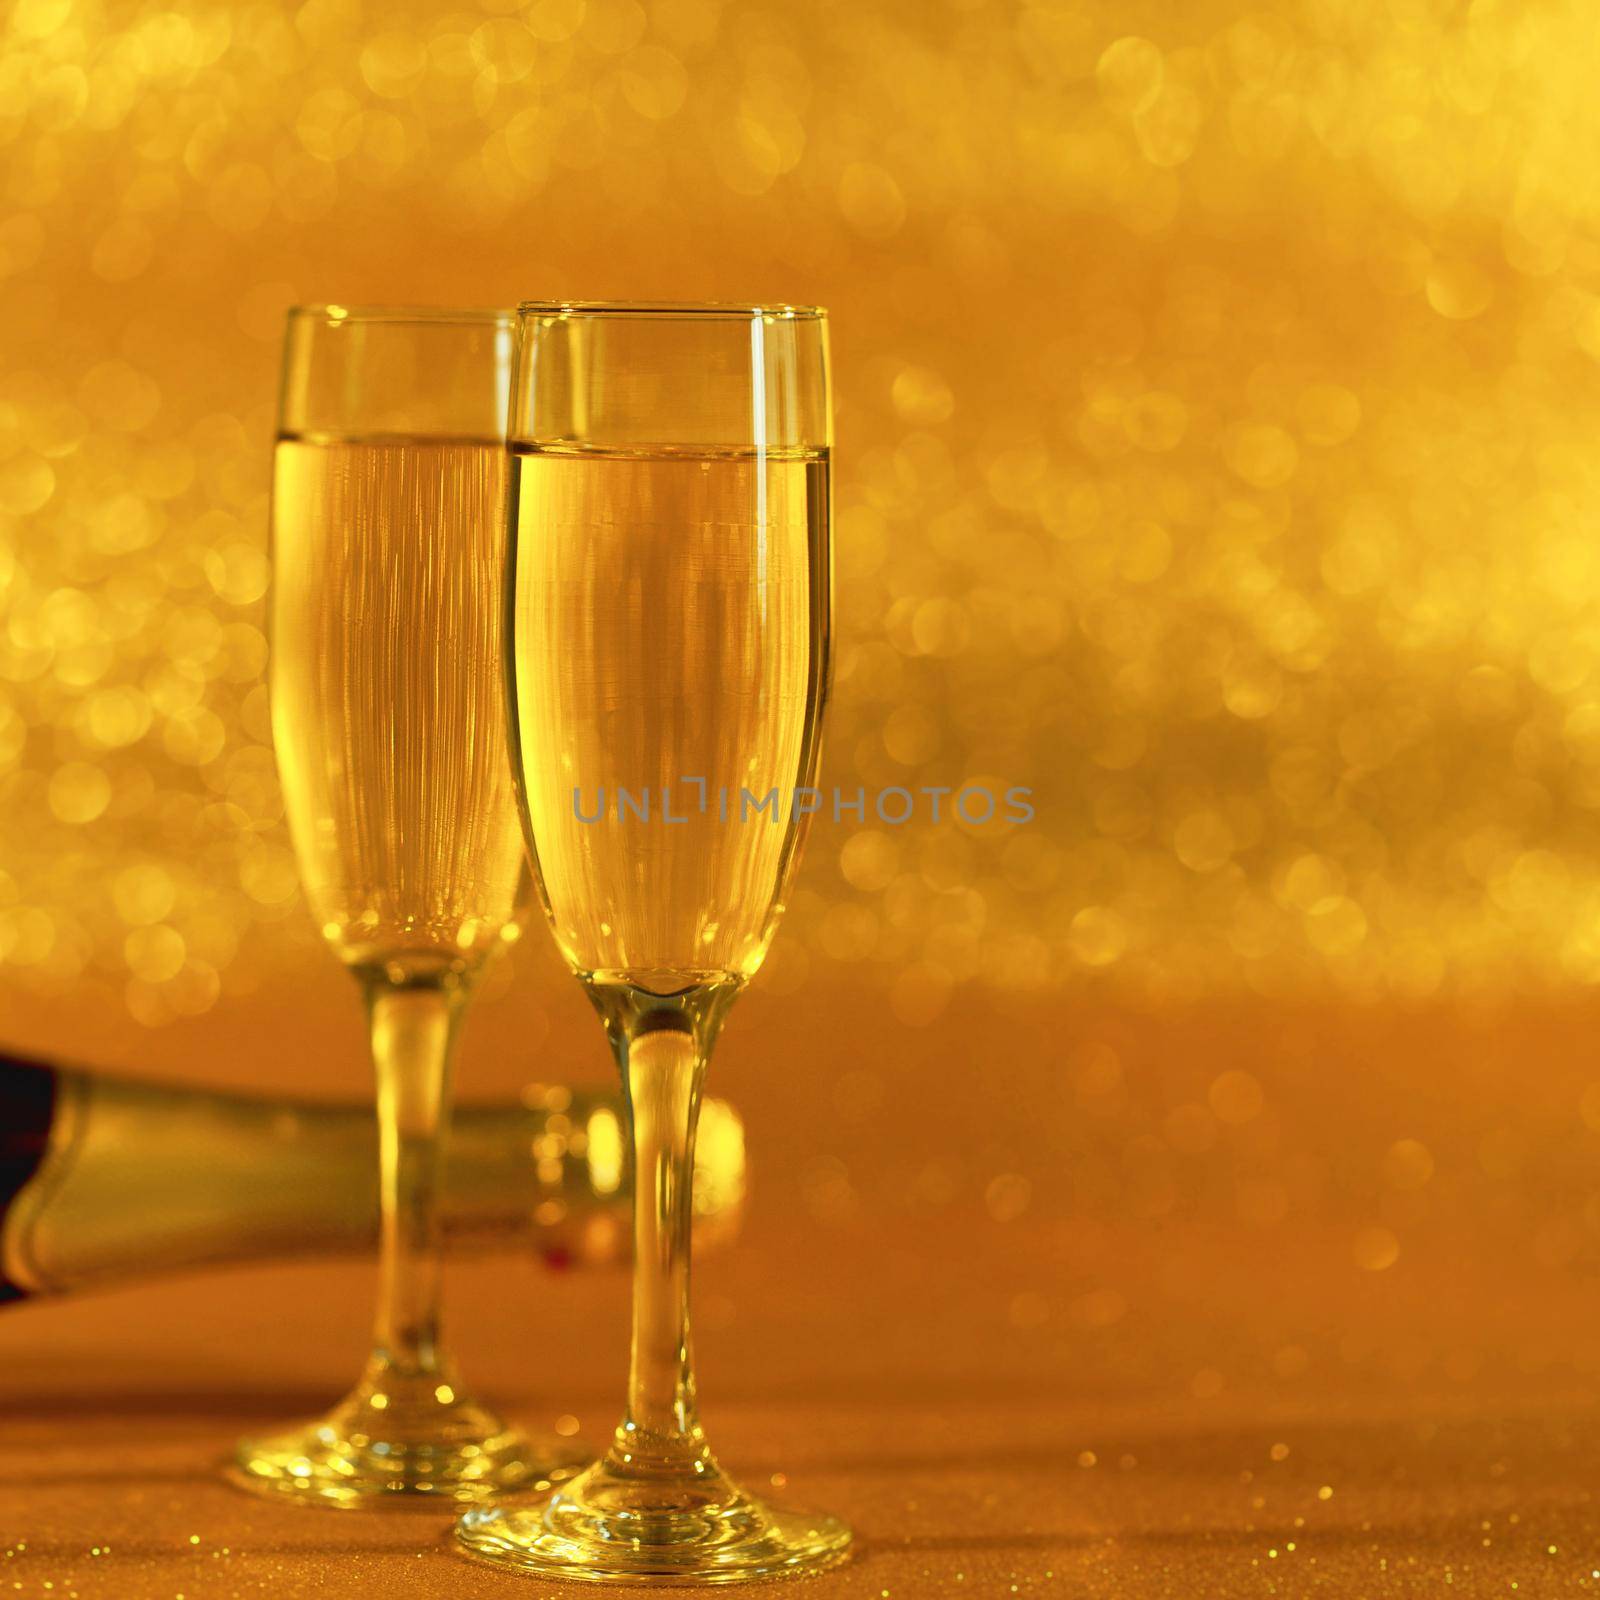 Glasses of champagne with splash, celebration theme concept